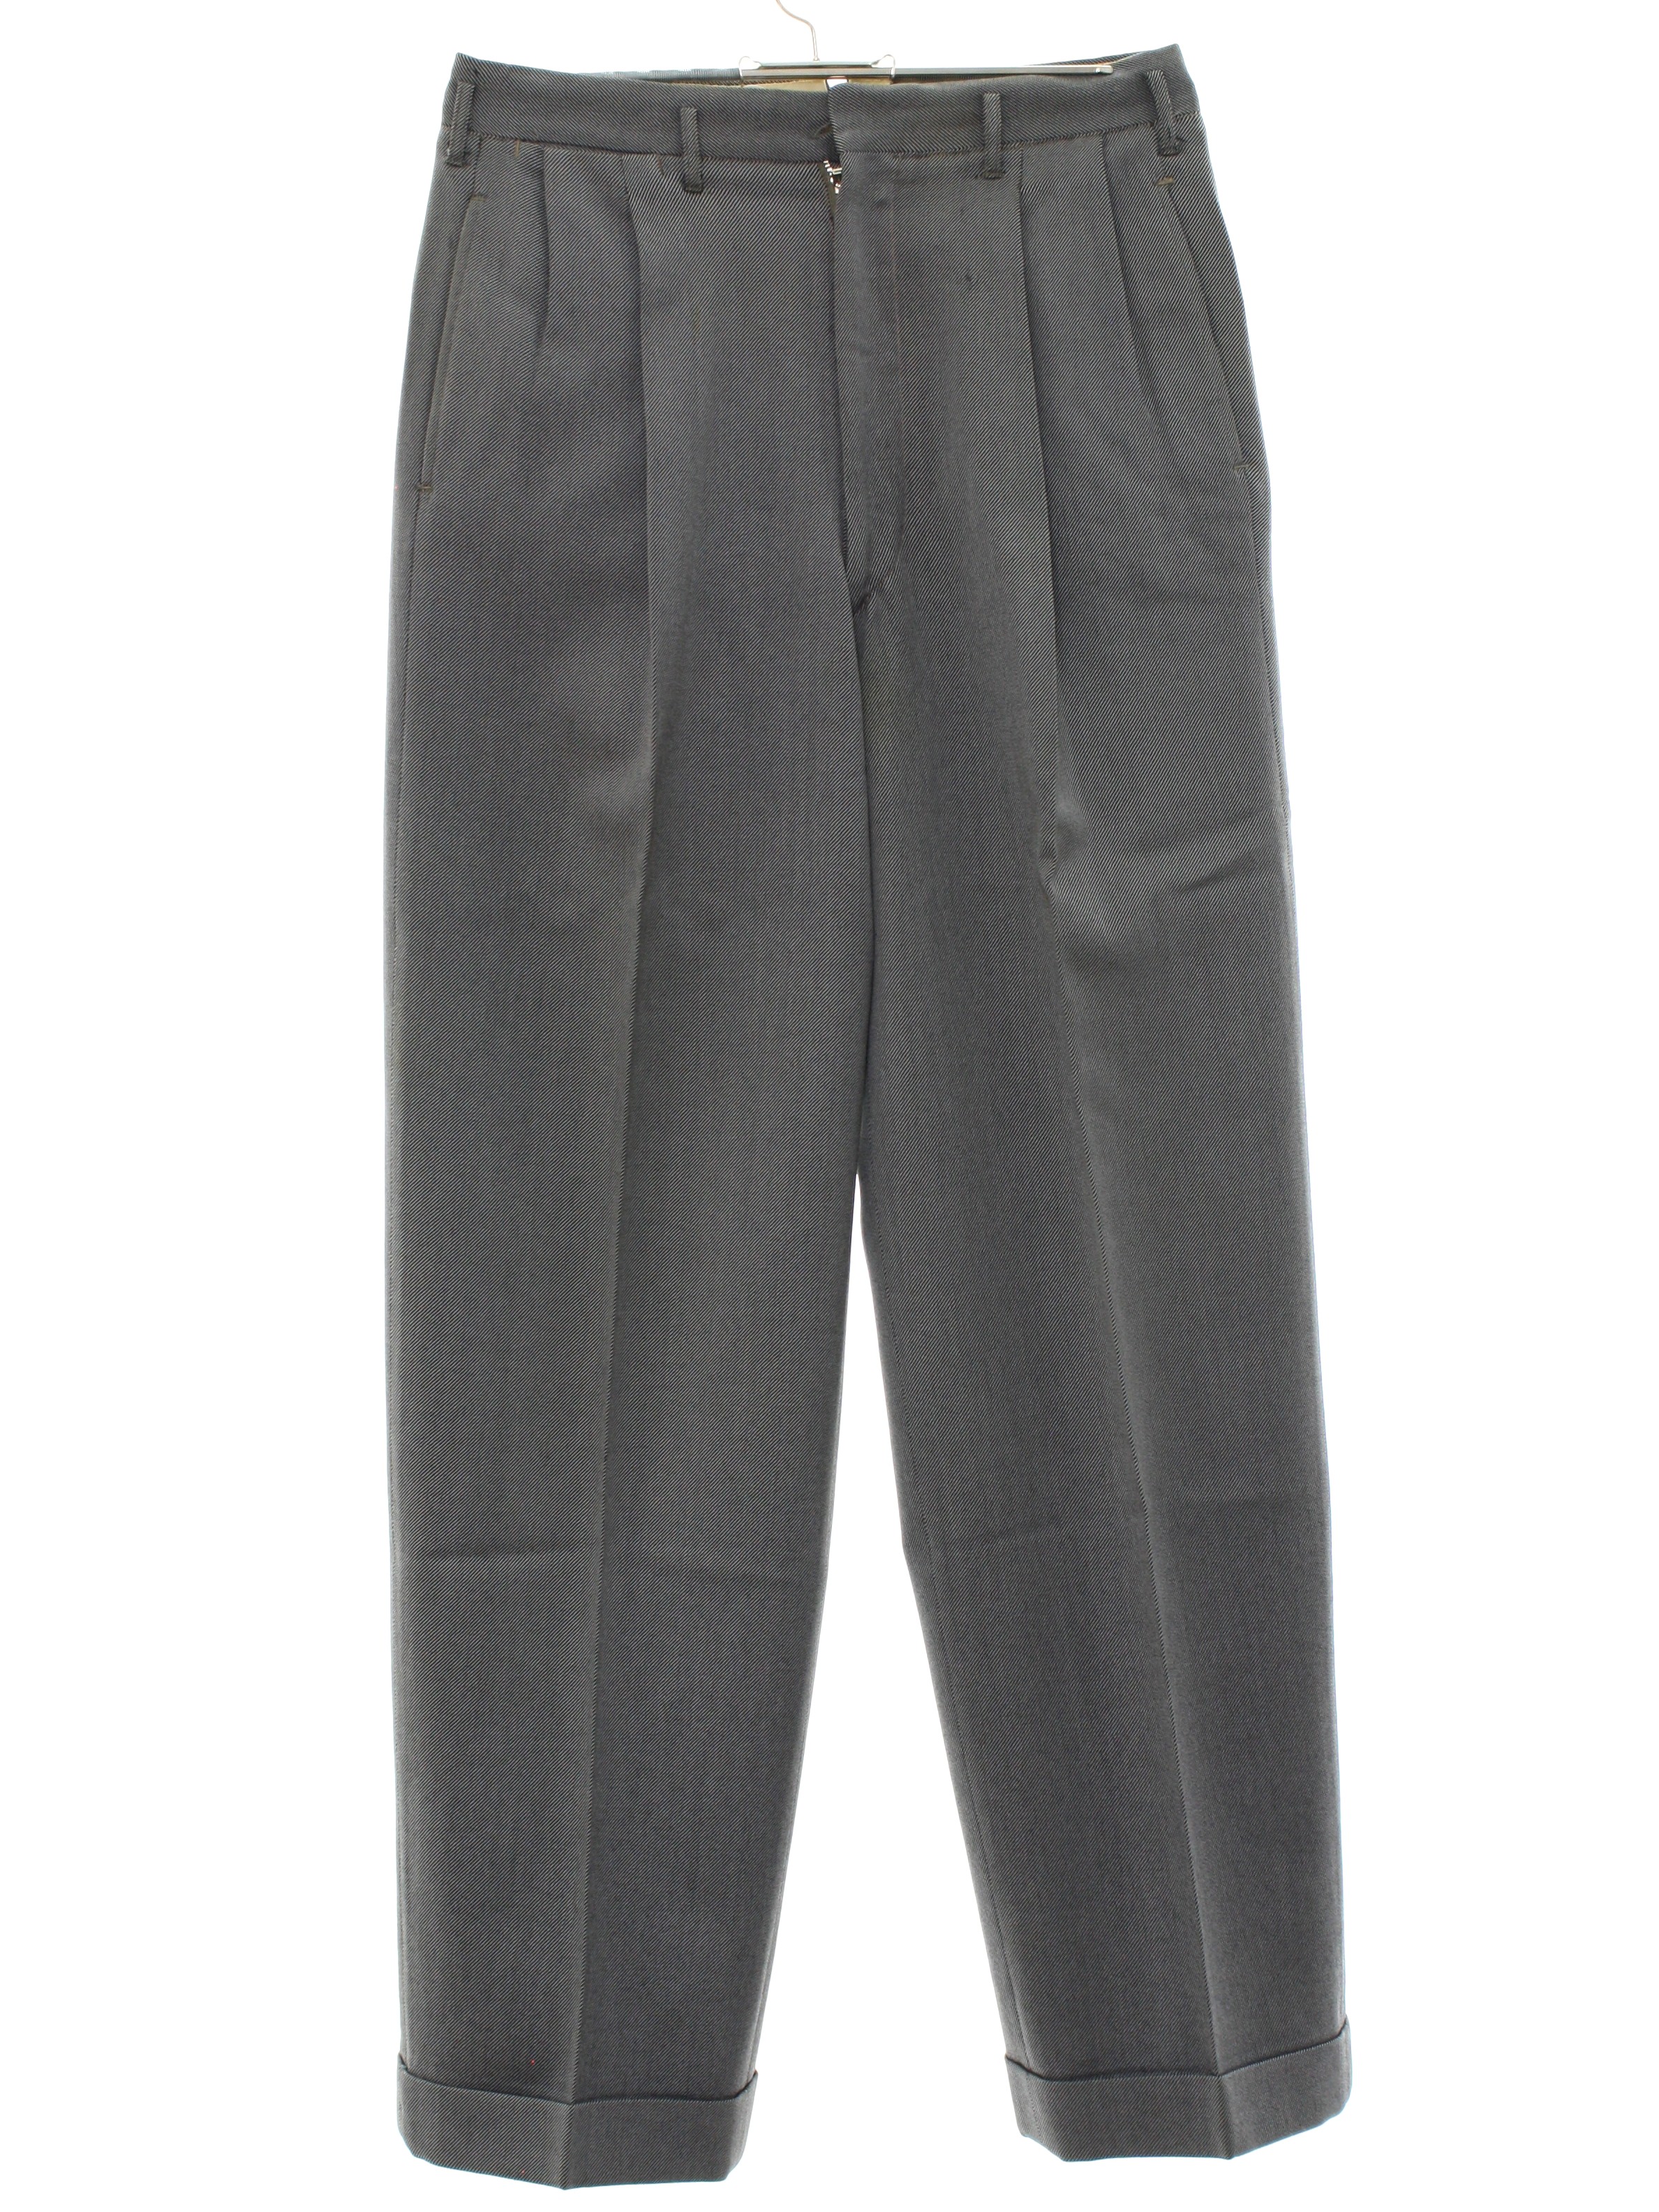 Vintage 1940s Pants: Late 40s -No Label- Mens white background, black ...